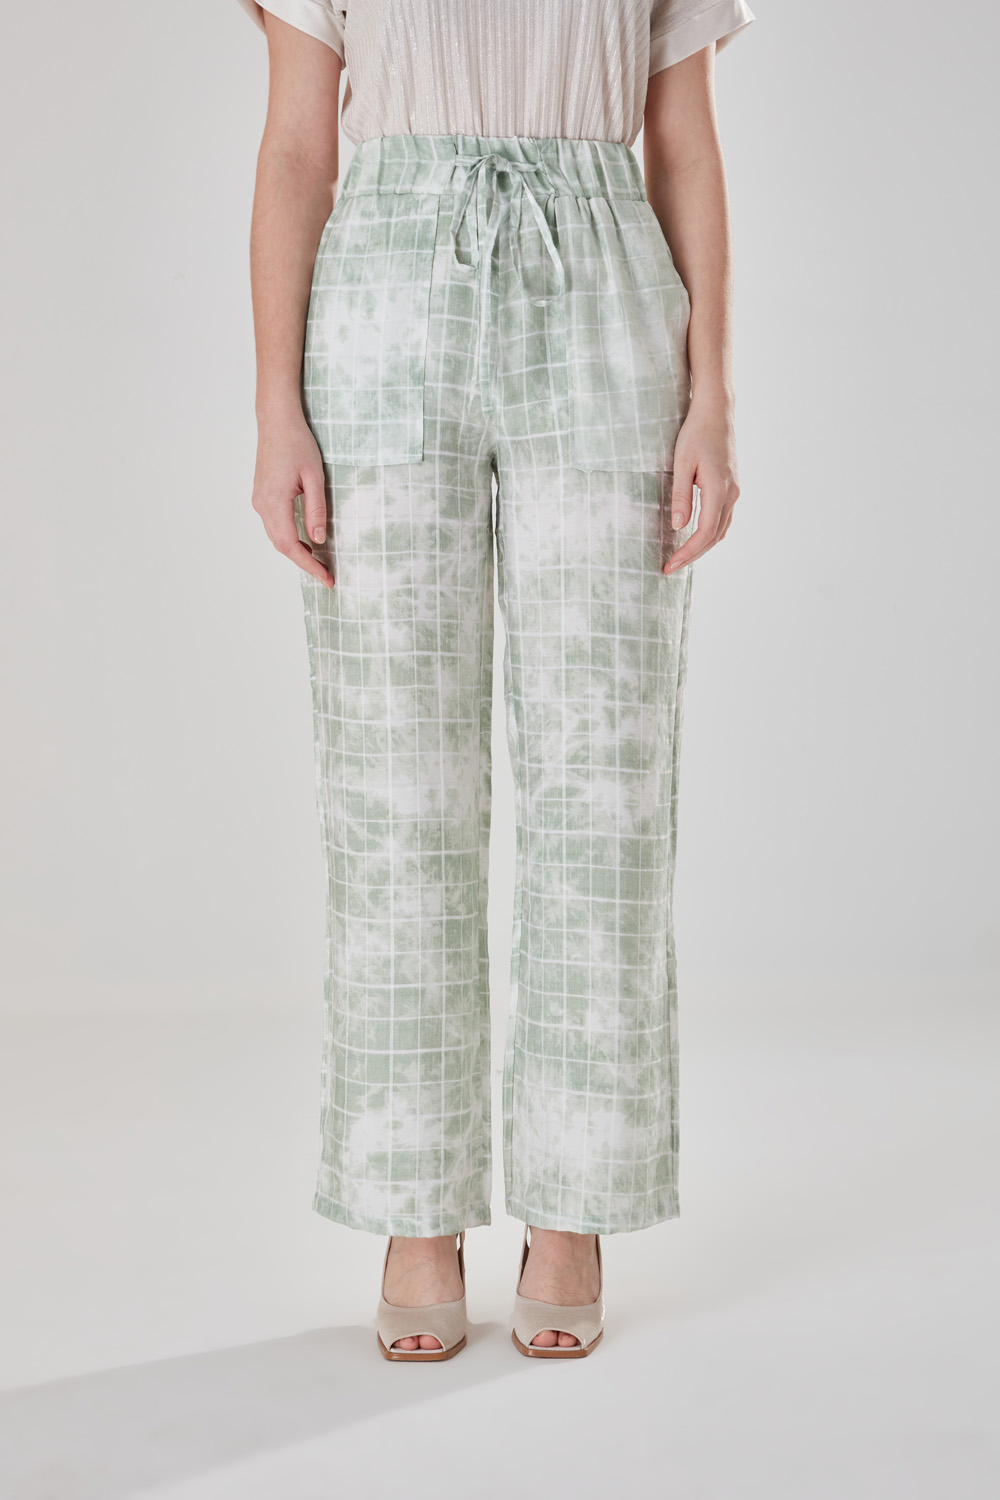 Mint Batik Patterned Checkered Trousers